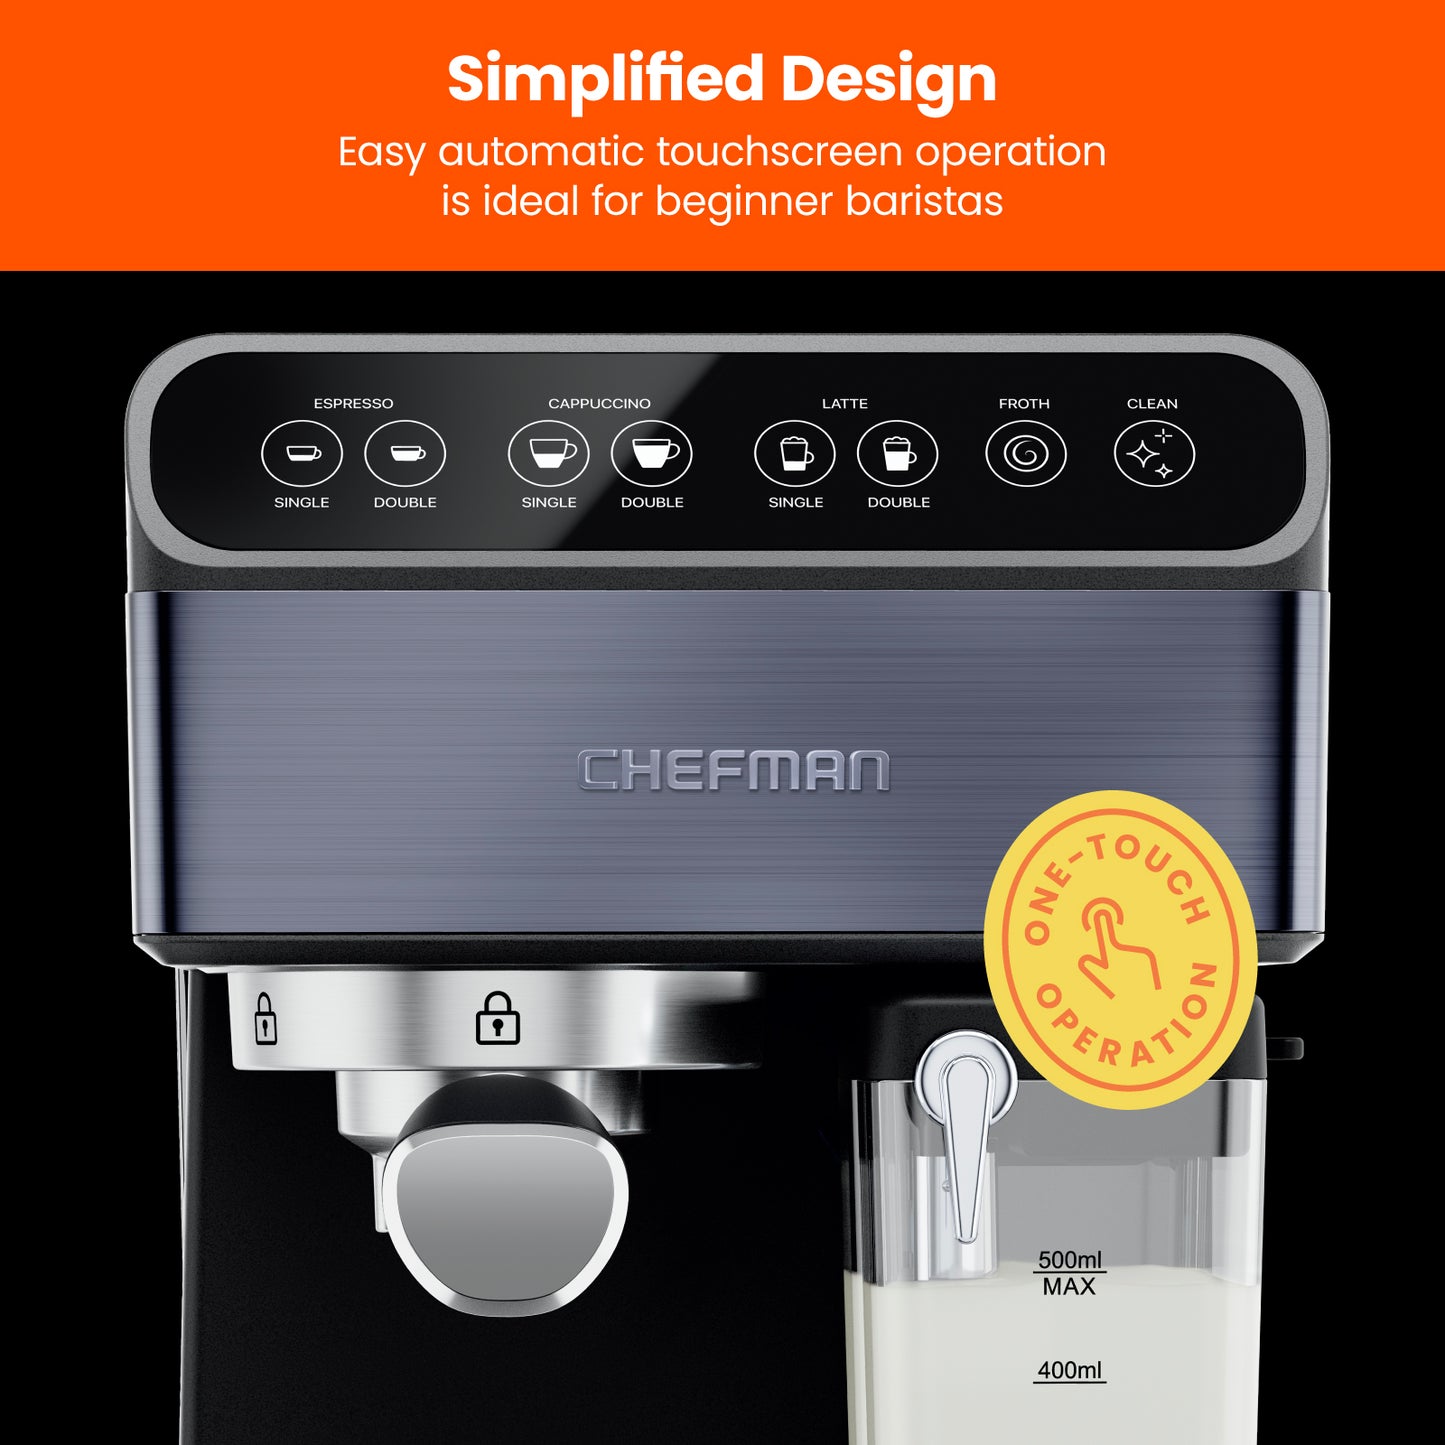 Chefman Barista Pro Espresso Machine Review